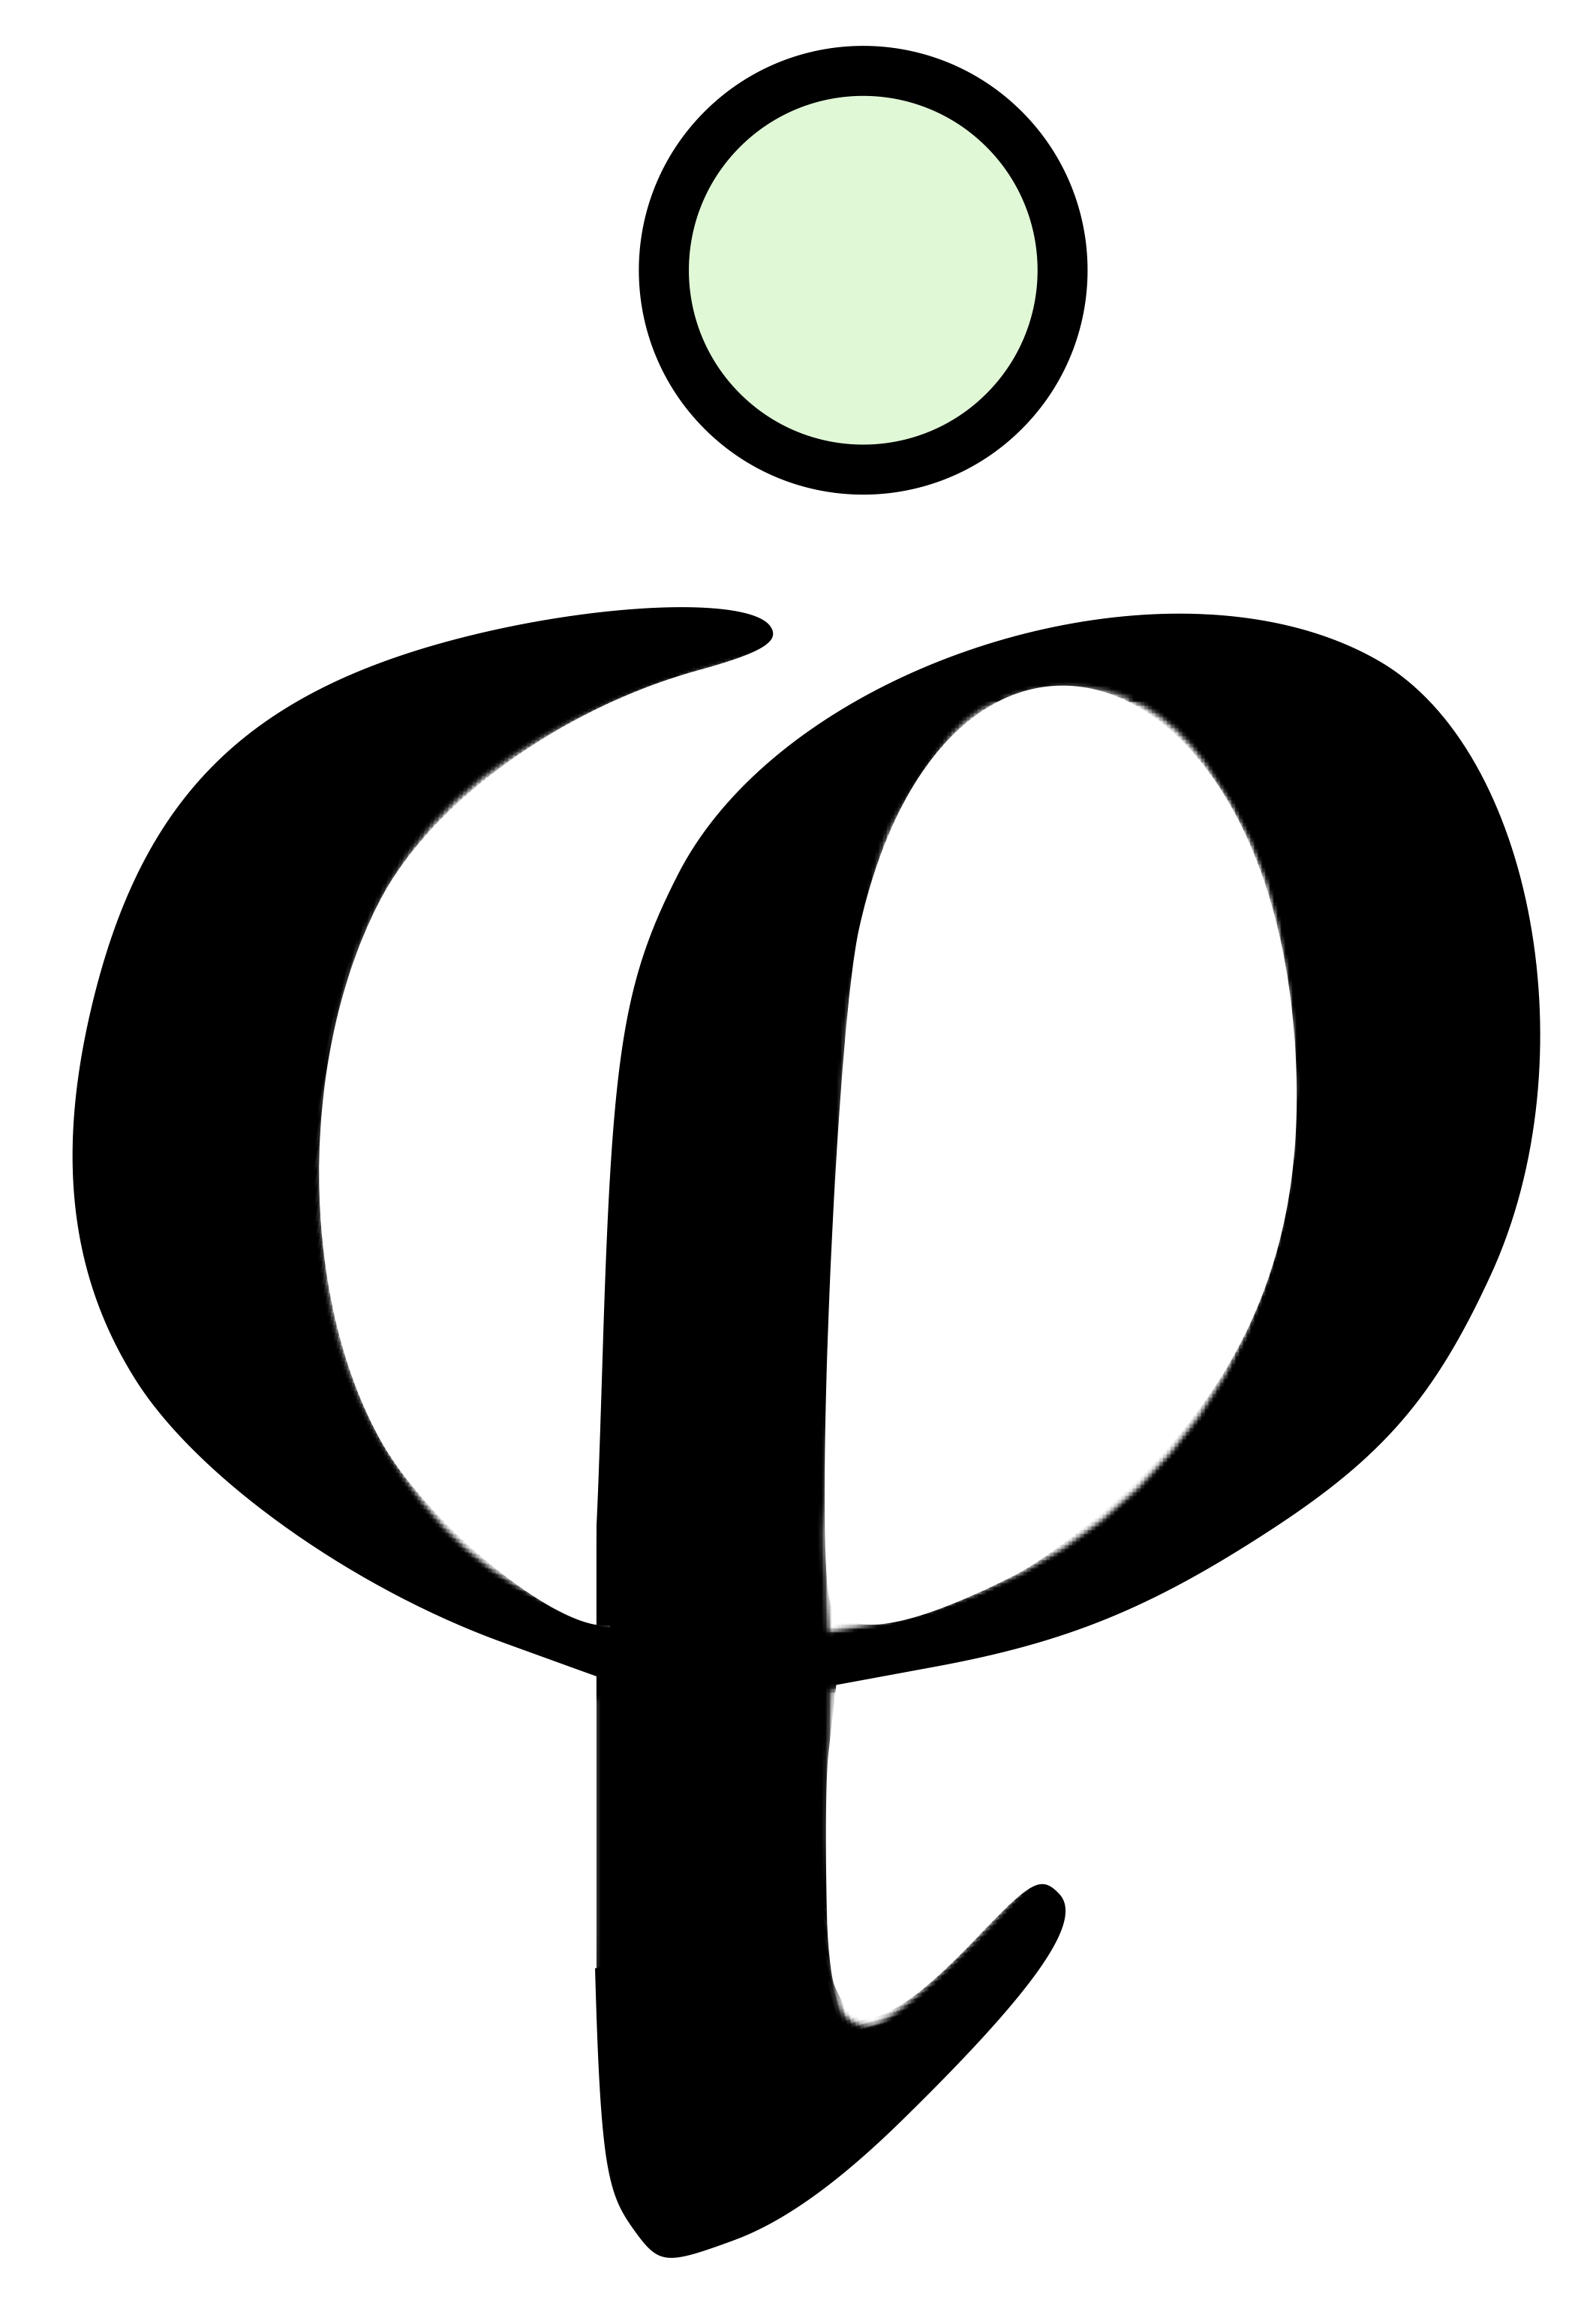 'quasi' group logo